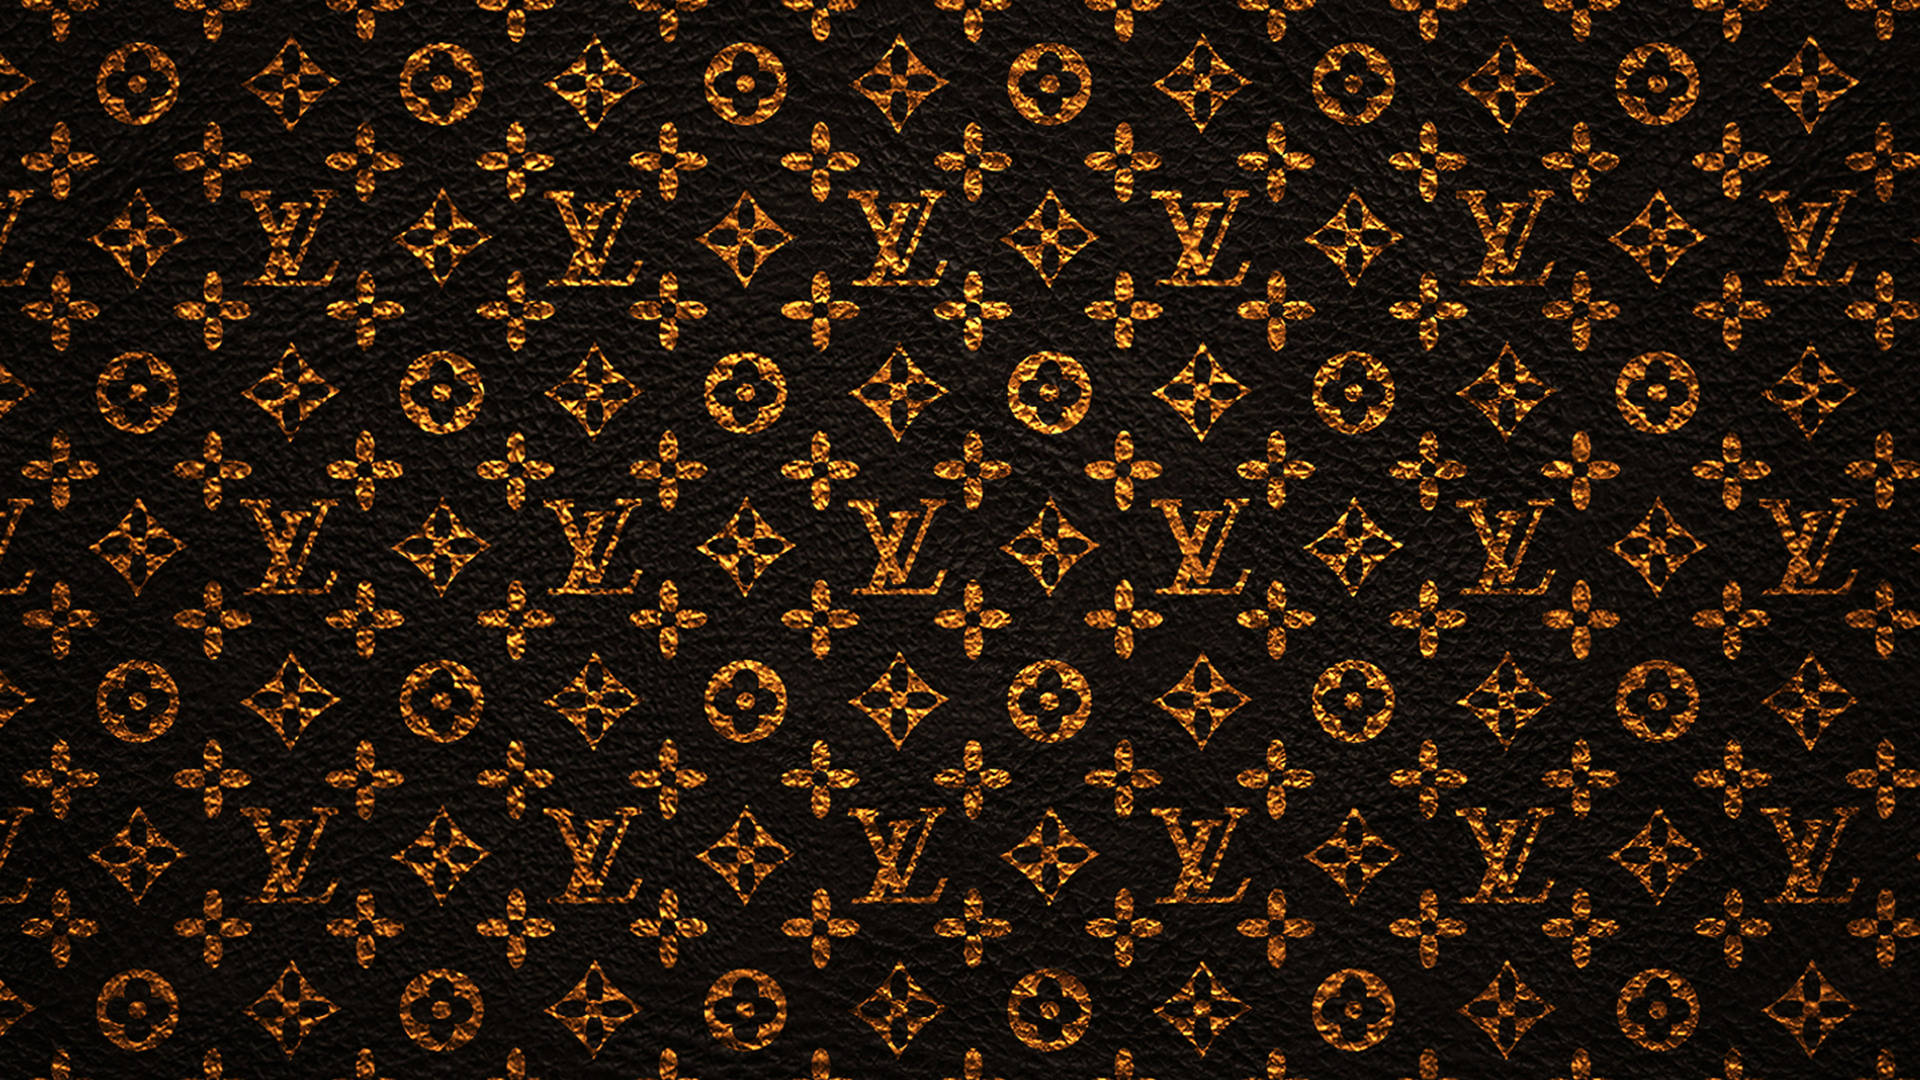 Textured LV fashion brand pattern wallpaper.